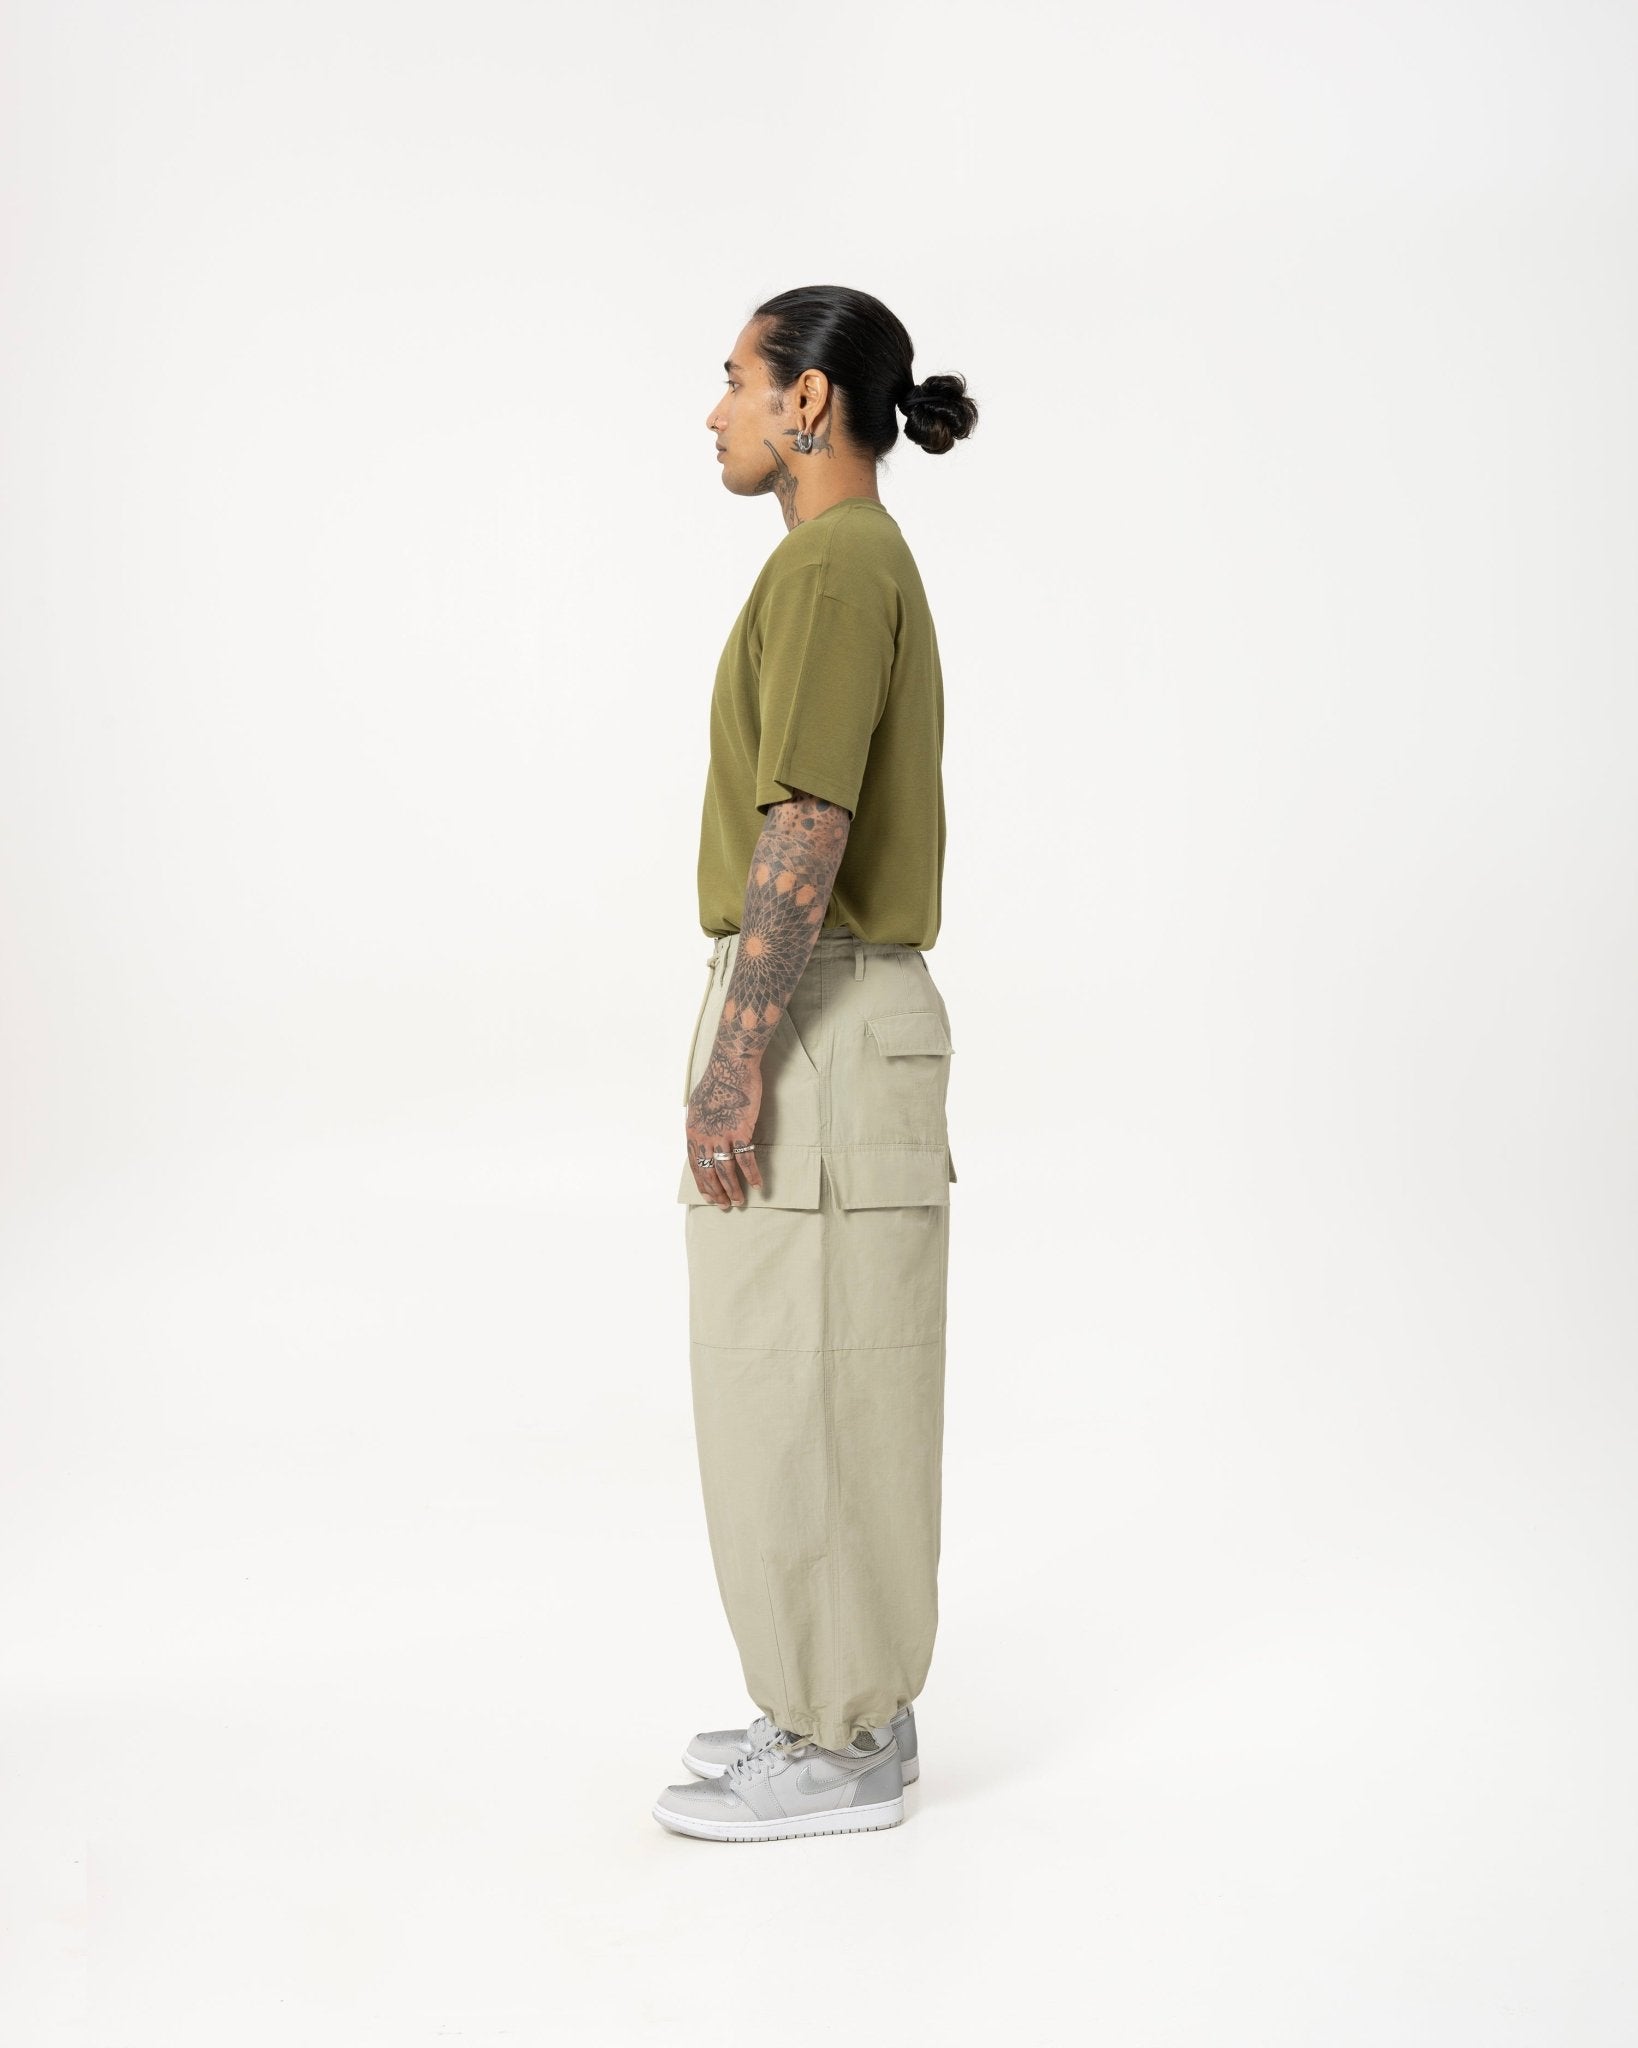 Multi-Pocket Ripstop Pants - Light Khaki - G R A Y E